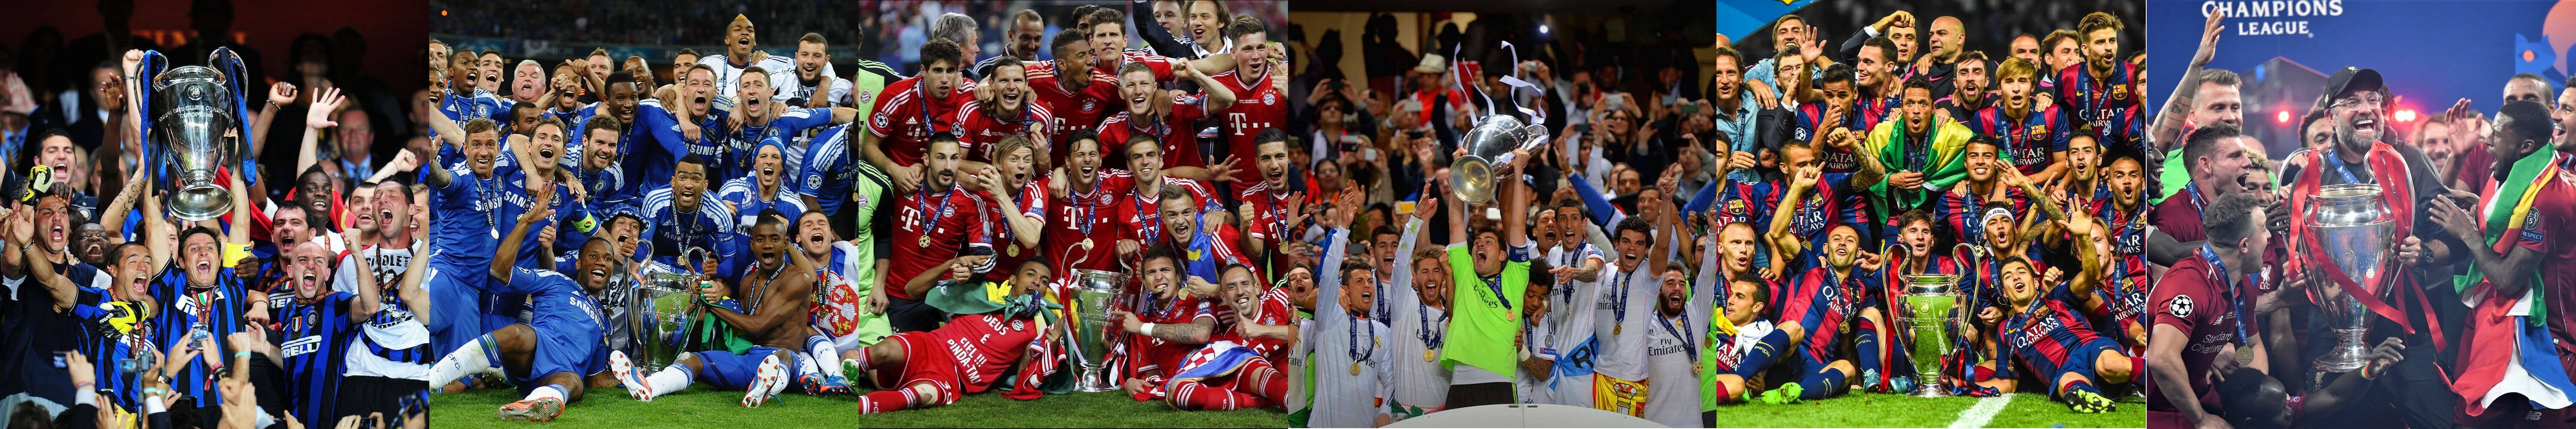 Champions League winners 2010s